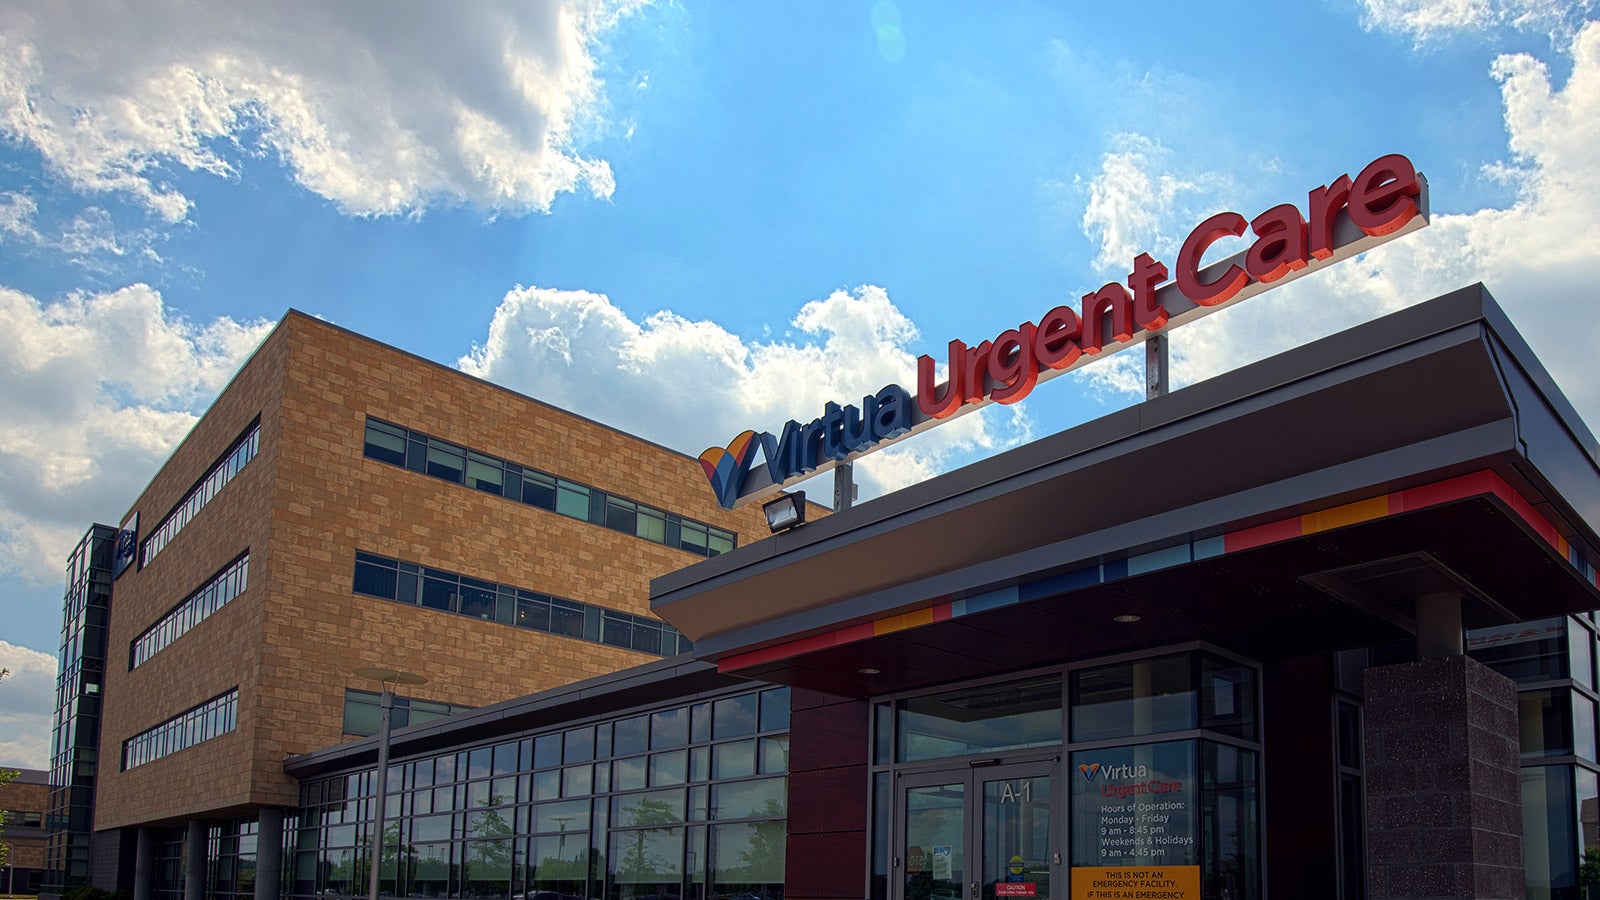 Virtua urgent care facility in Washington Township